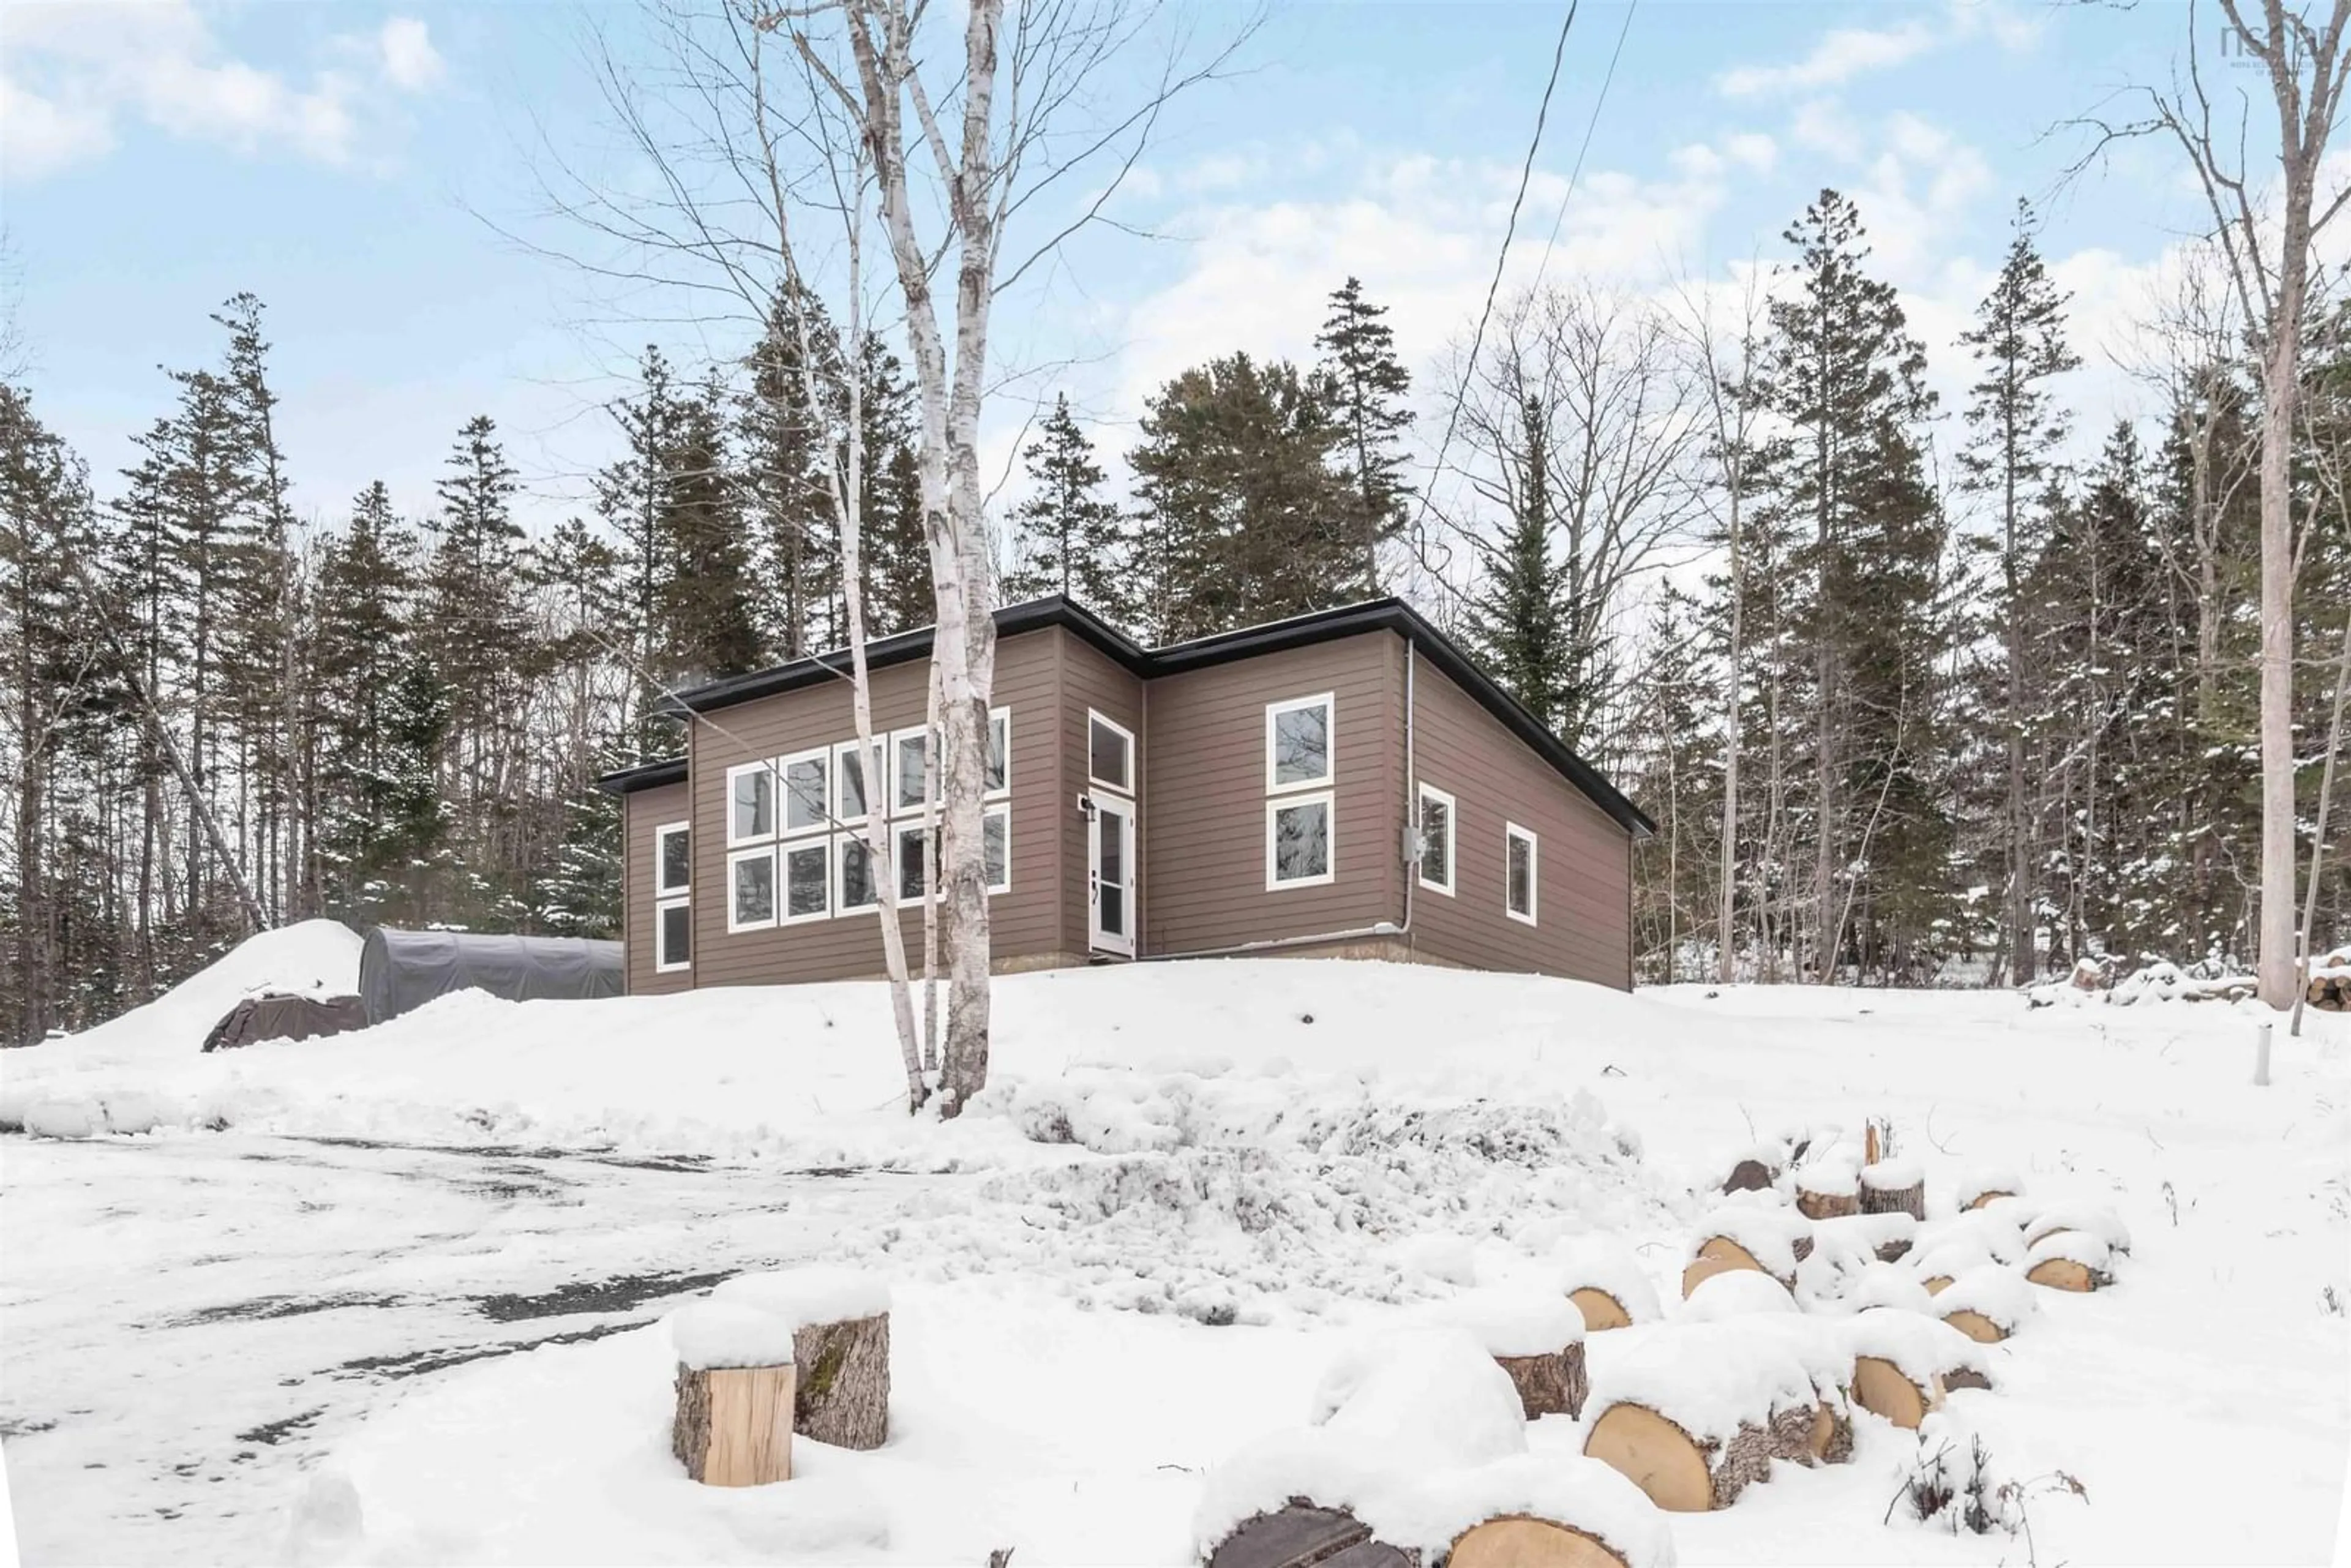 Home with stone exterior material for 462 Chute Rd, Bear River Nova Scotia B0S 1B0